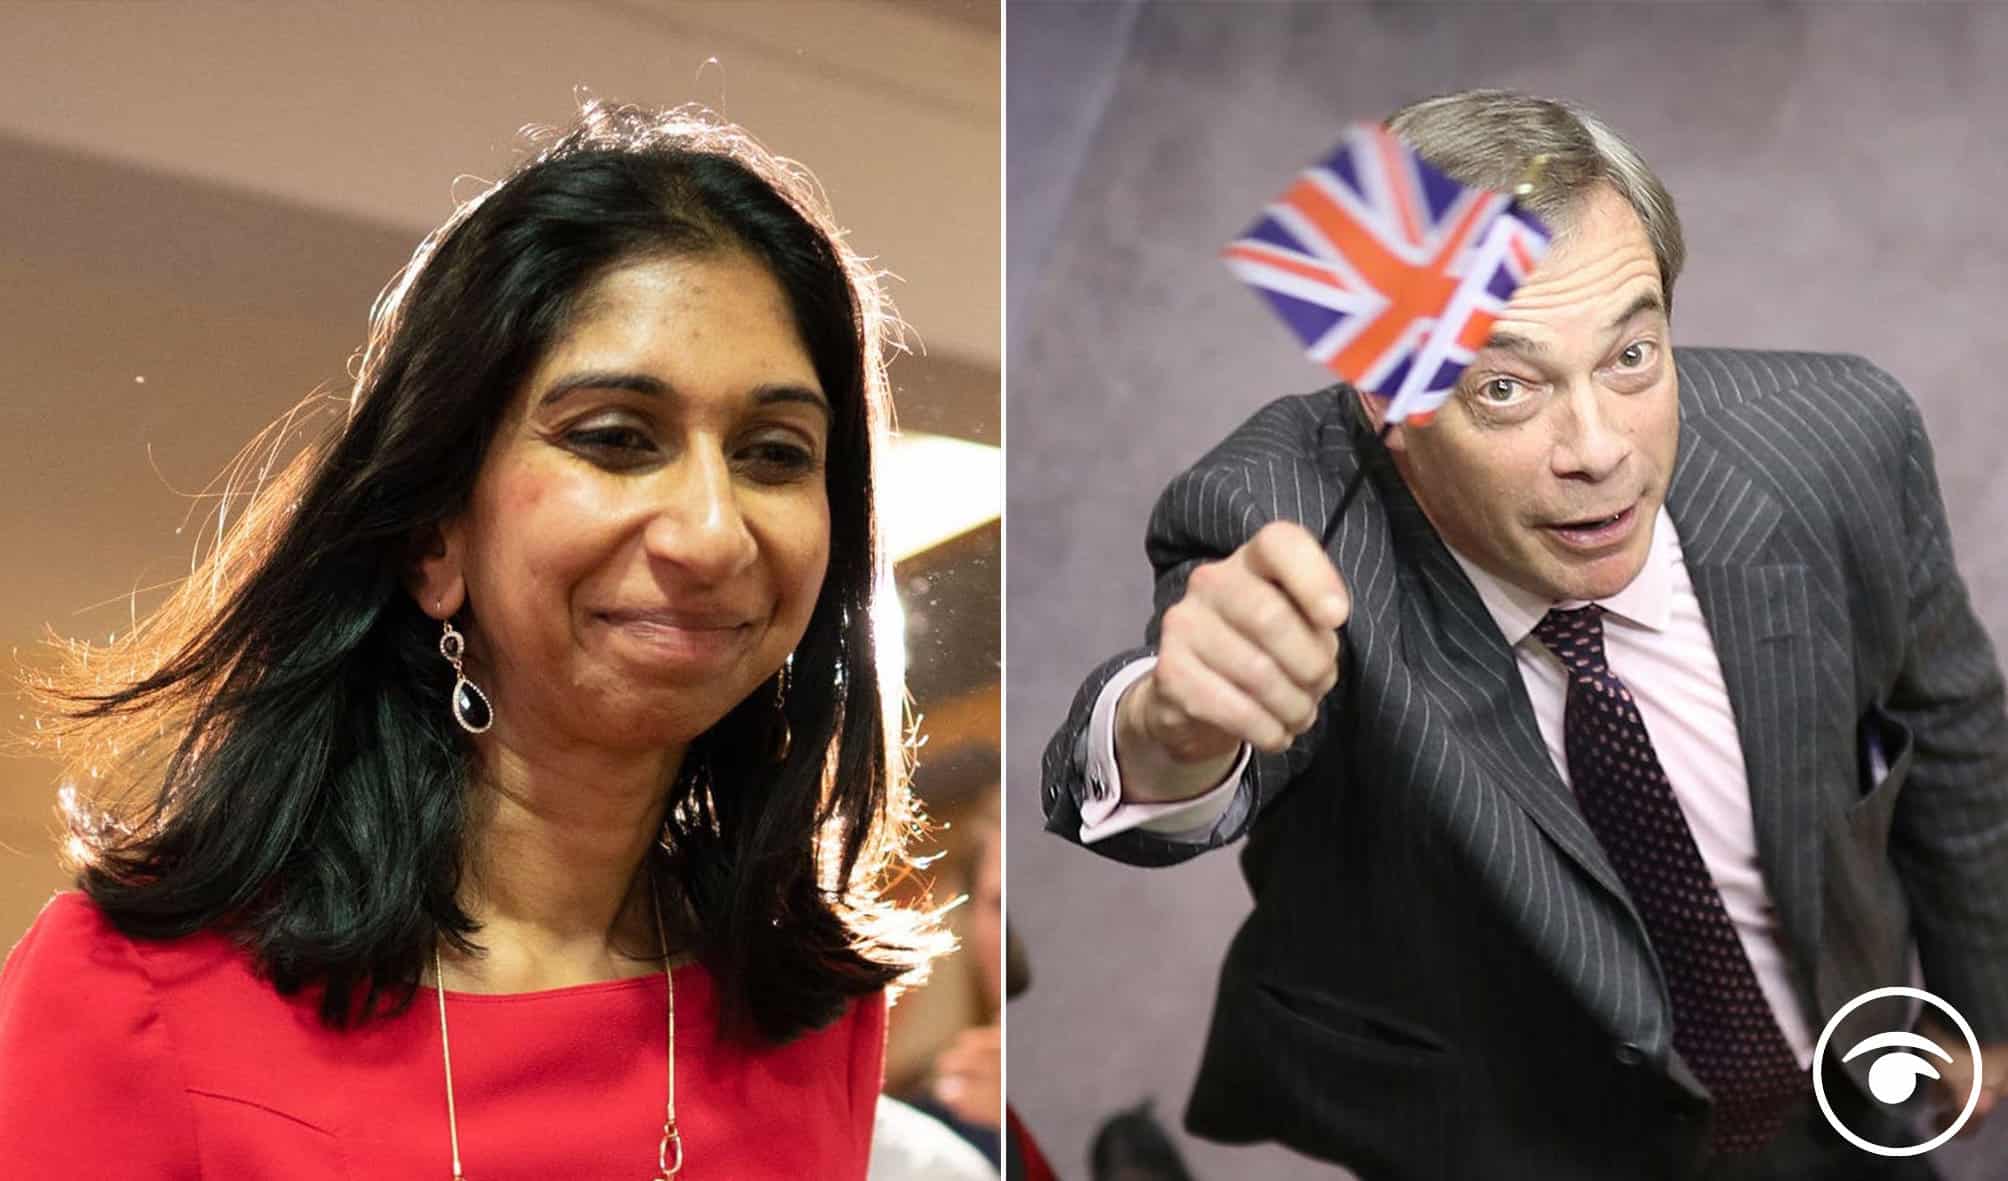 Farage lampooned for backing Braverman’s short-lived leadership race